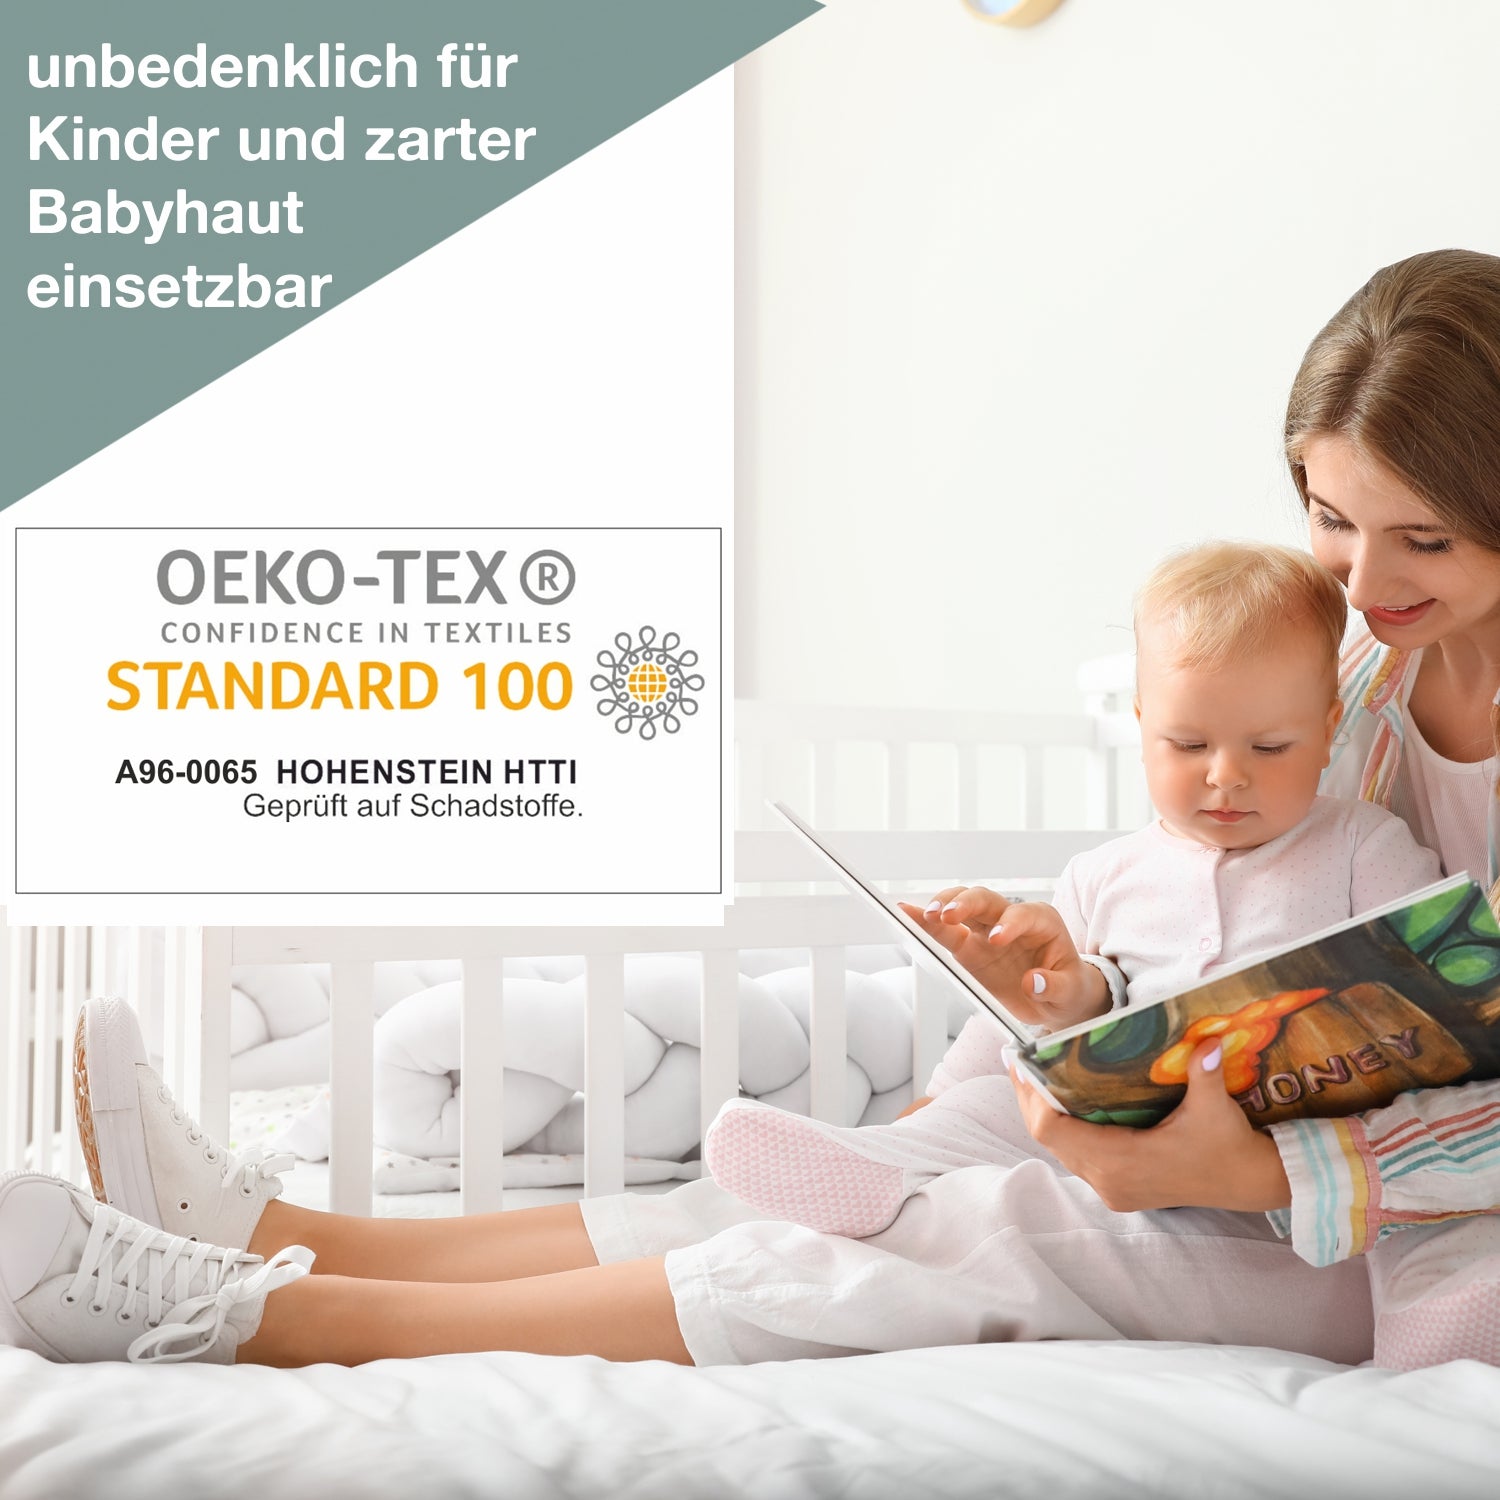 OEKO-TEX Zertififzierung